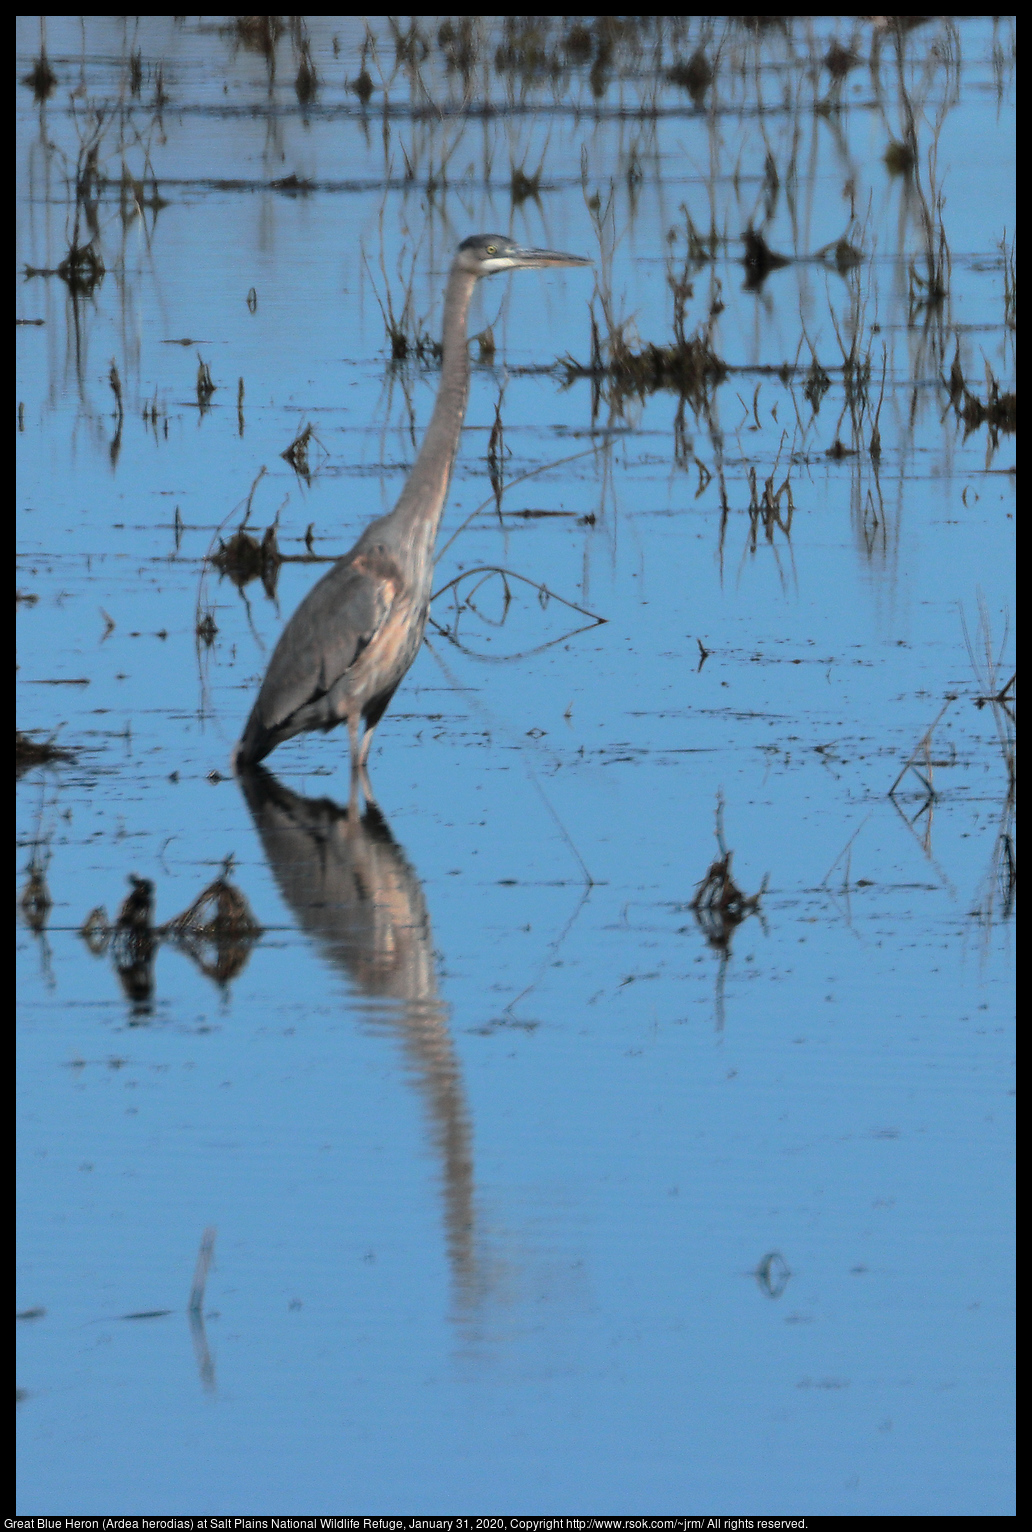 Great Blue Heron (Ardea herodias) at Salt Plains National Wildlife Refuge, January 31, 2020